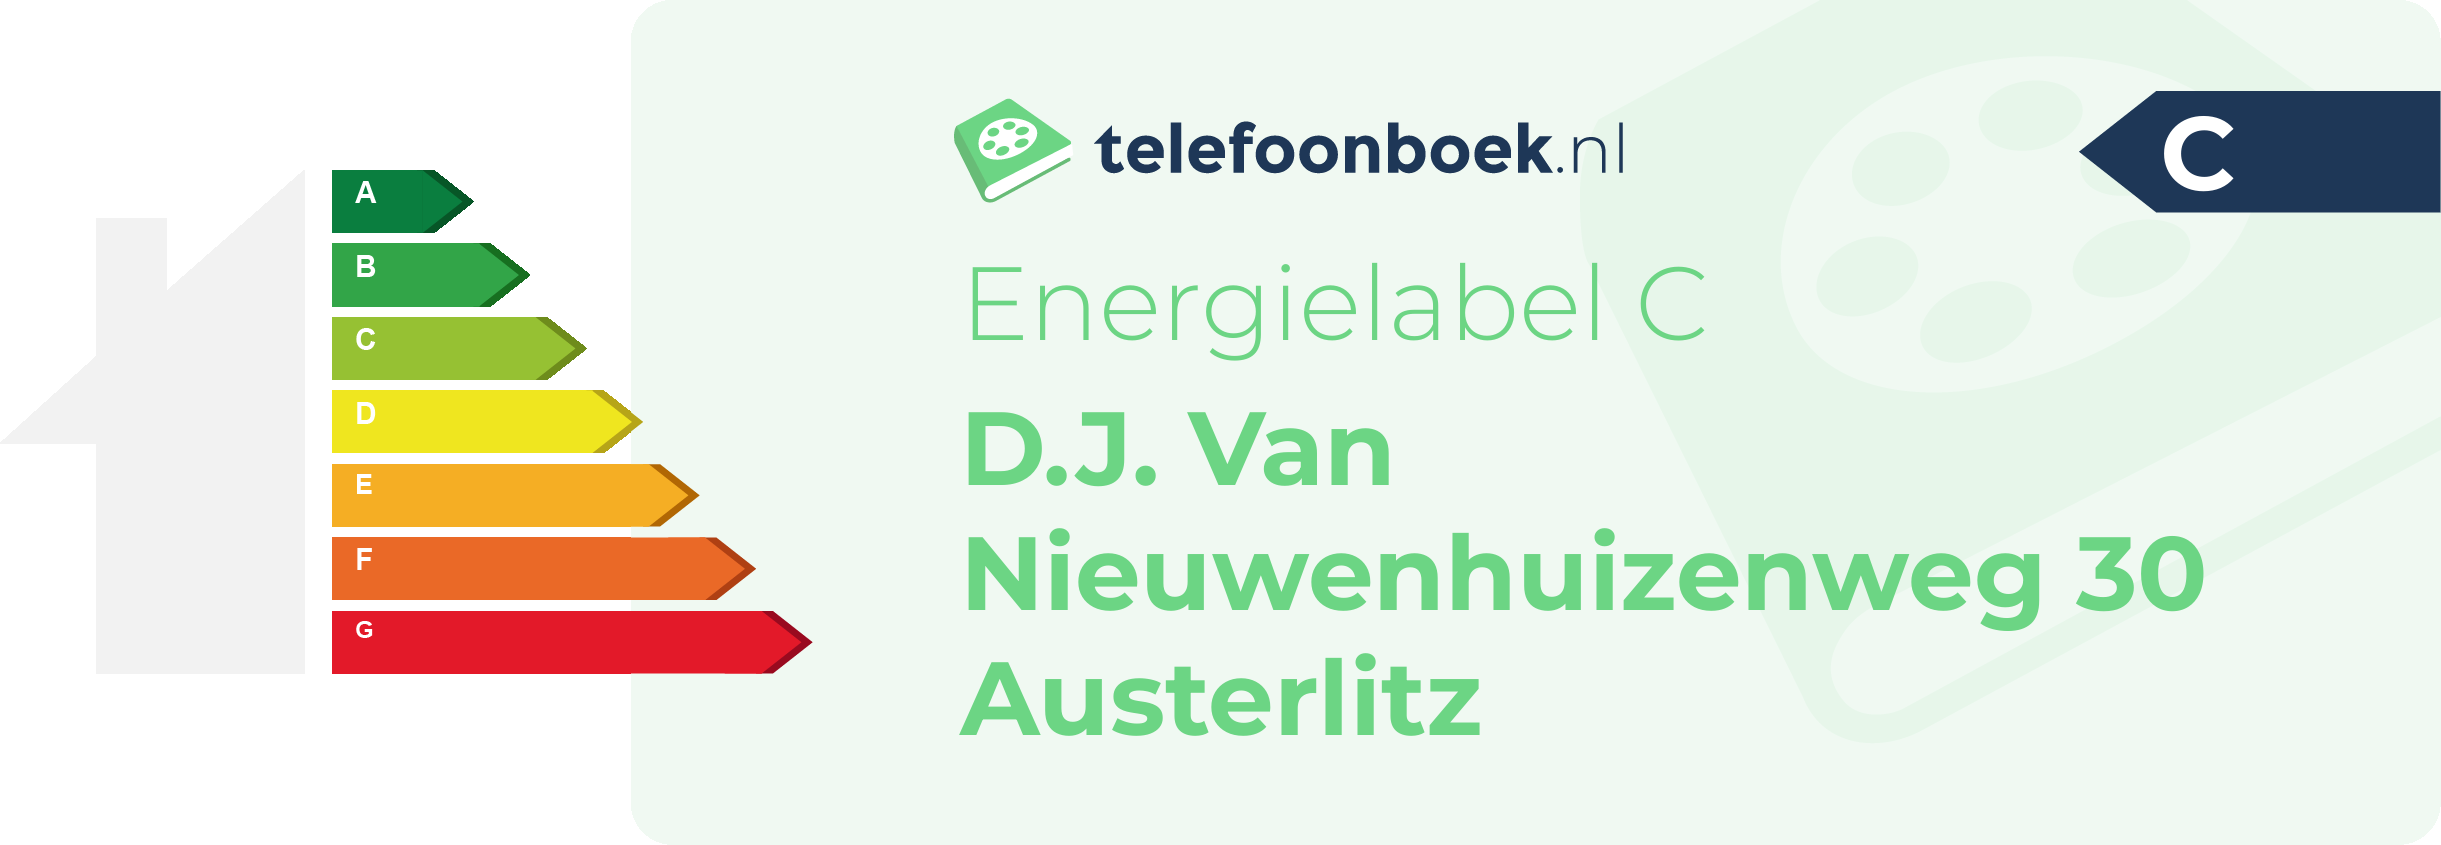 Energielabel D.J. Van Nieuwenhuizenweg 30 Austerlitz